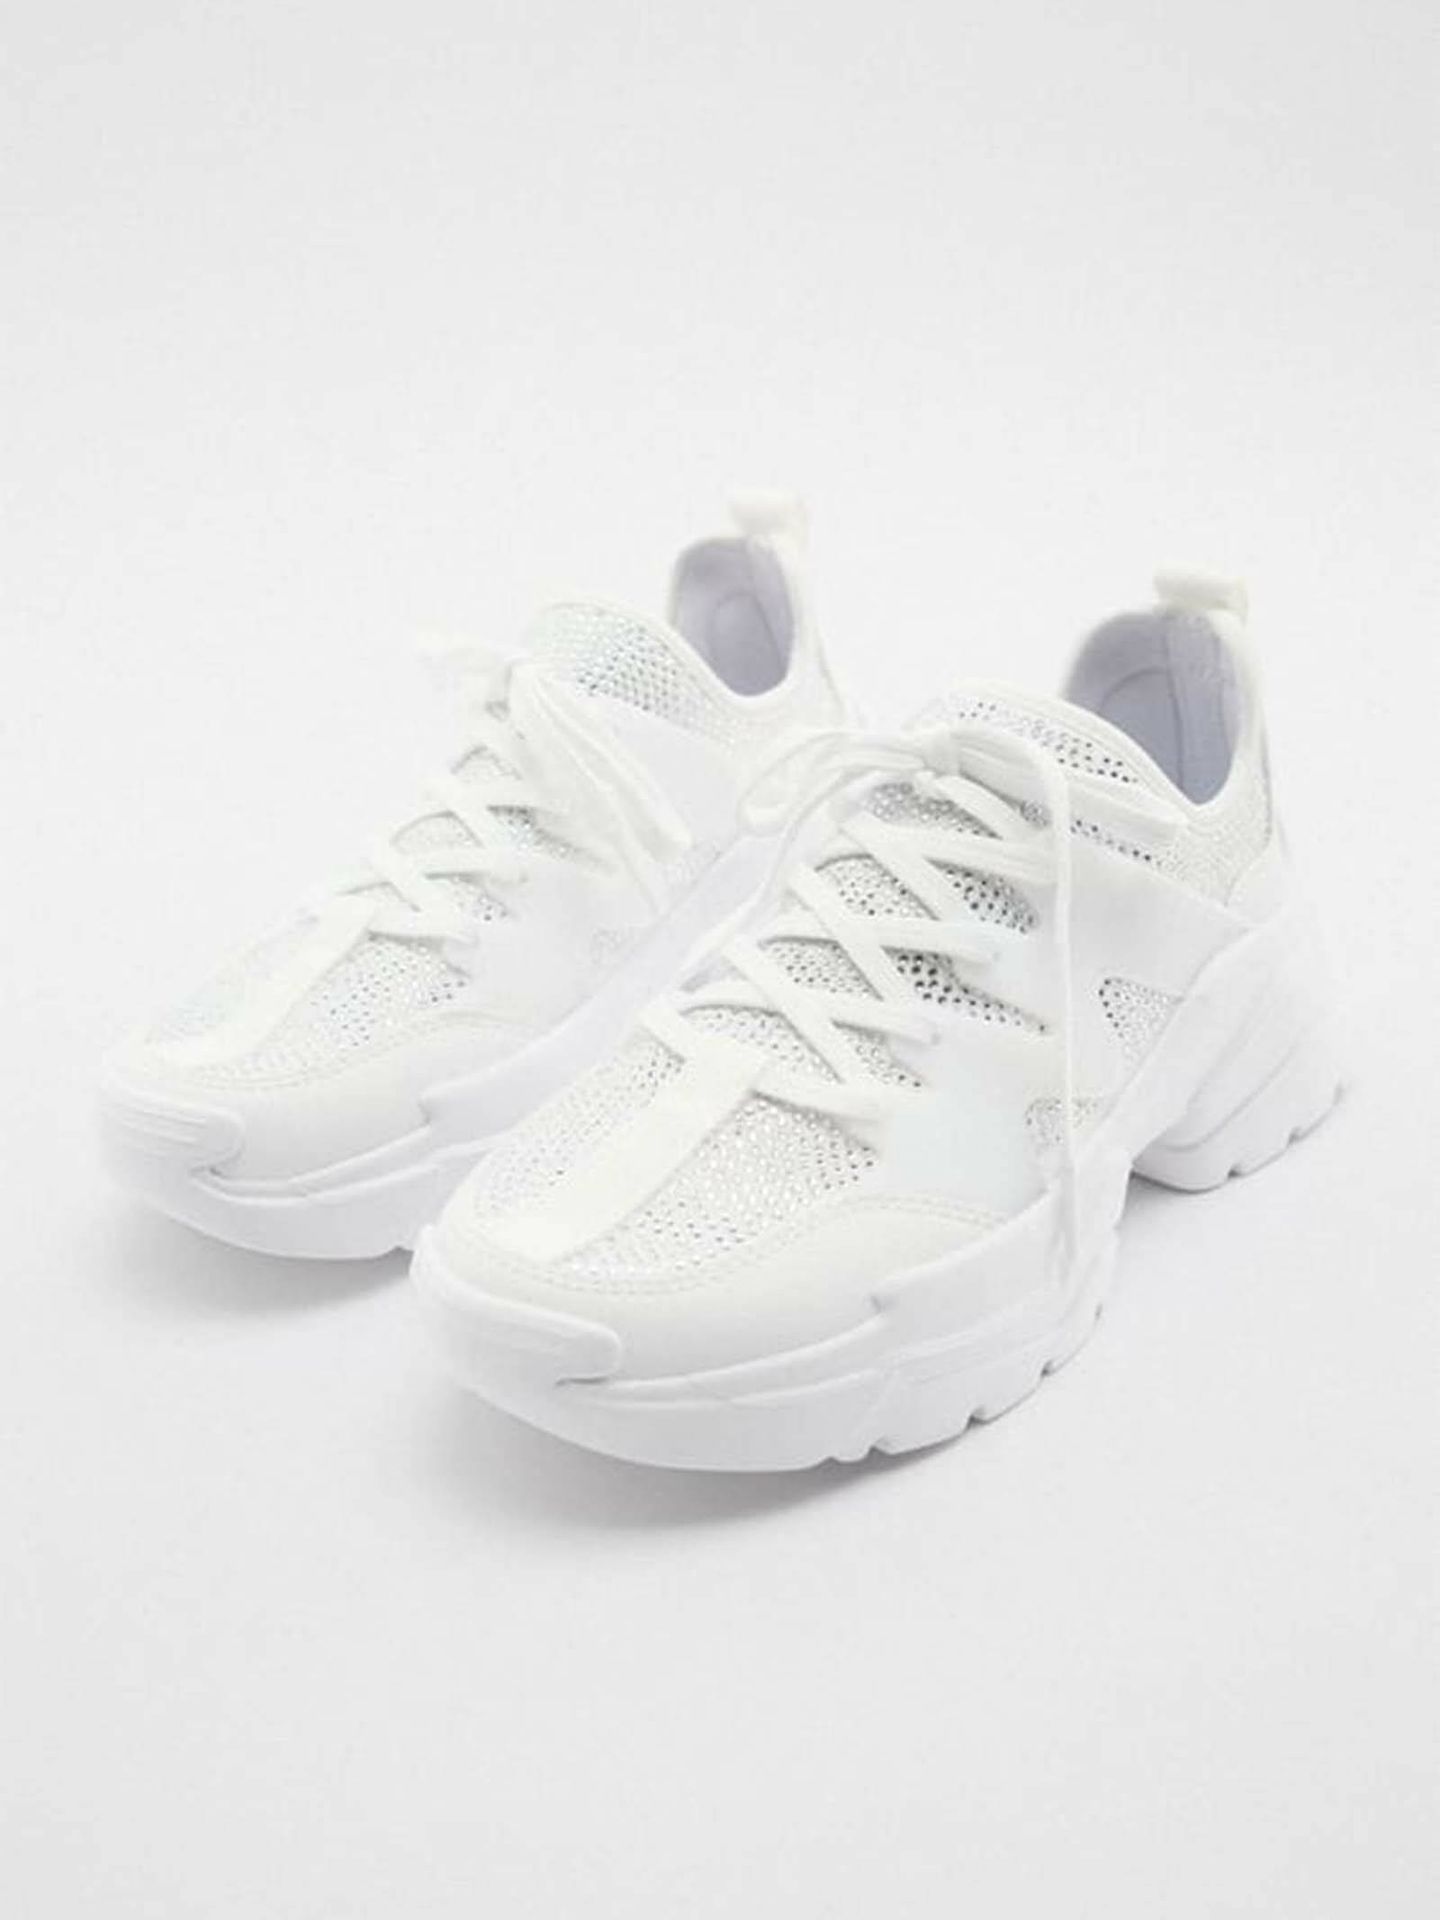 5 zapatillas de deporte blancas por menos de 50 euros. (Zara/Cortesía)